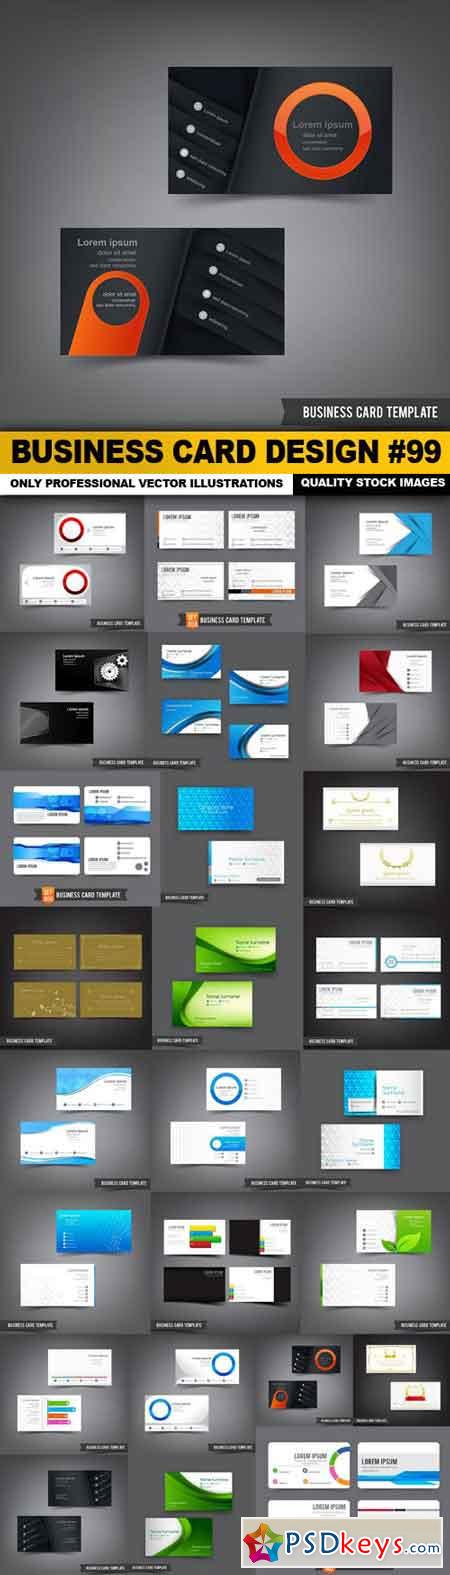 Business Card Design #99 - 25 Vector